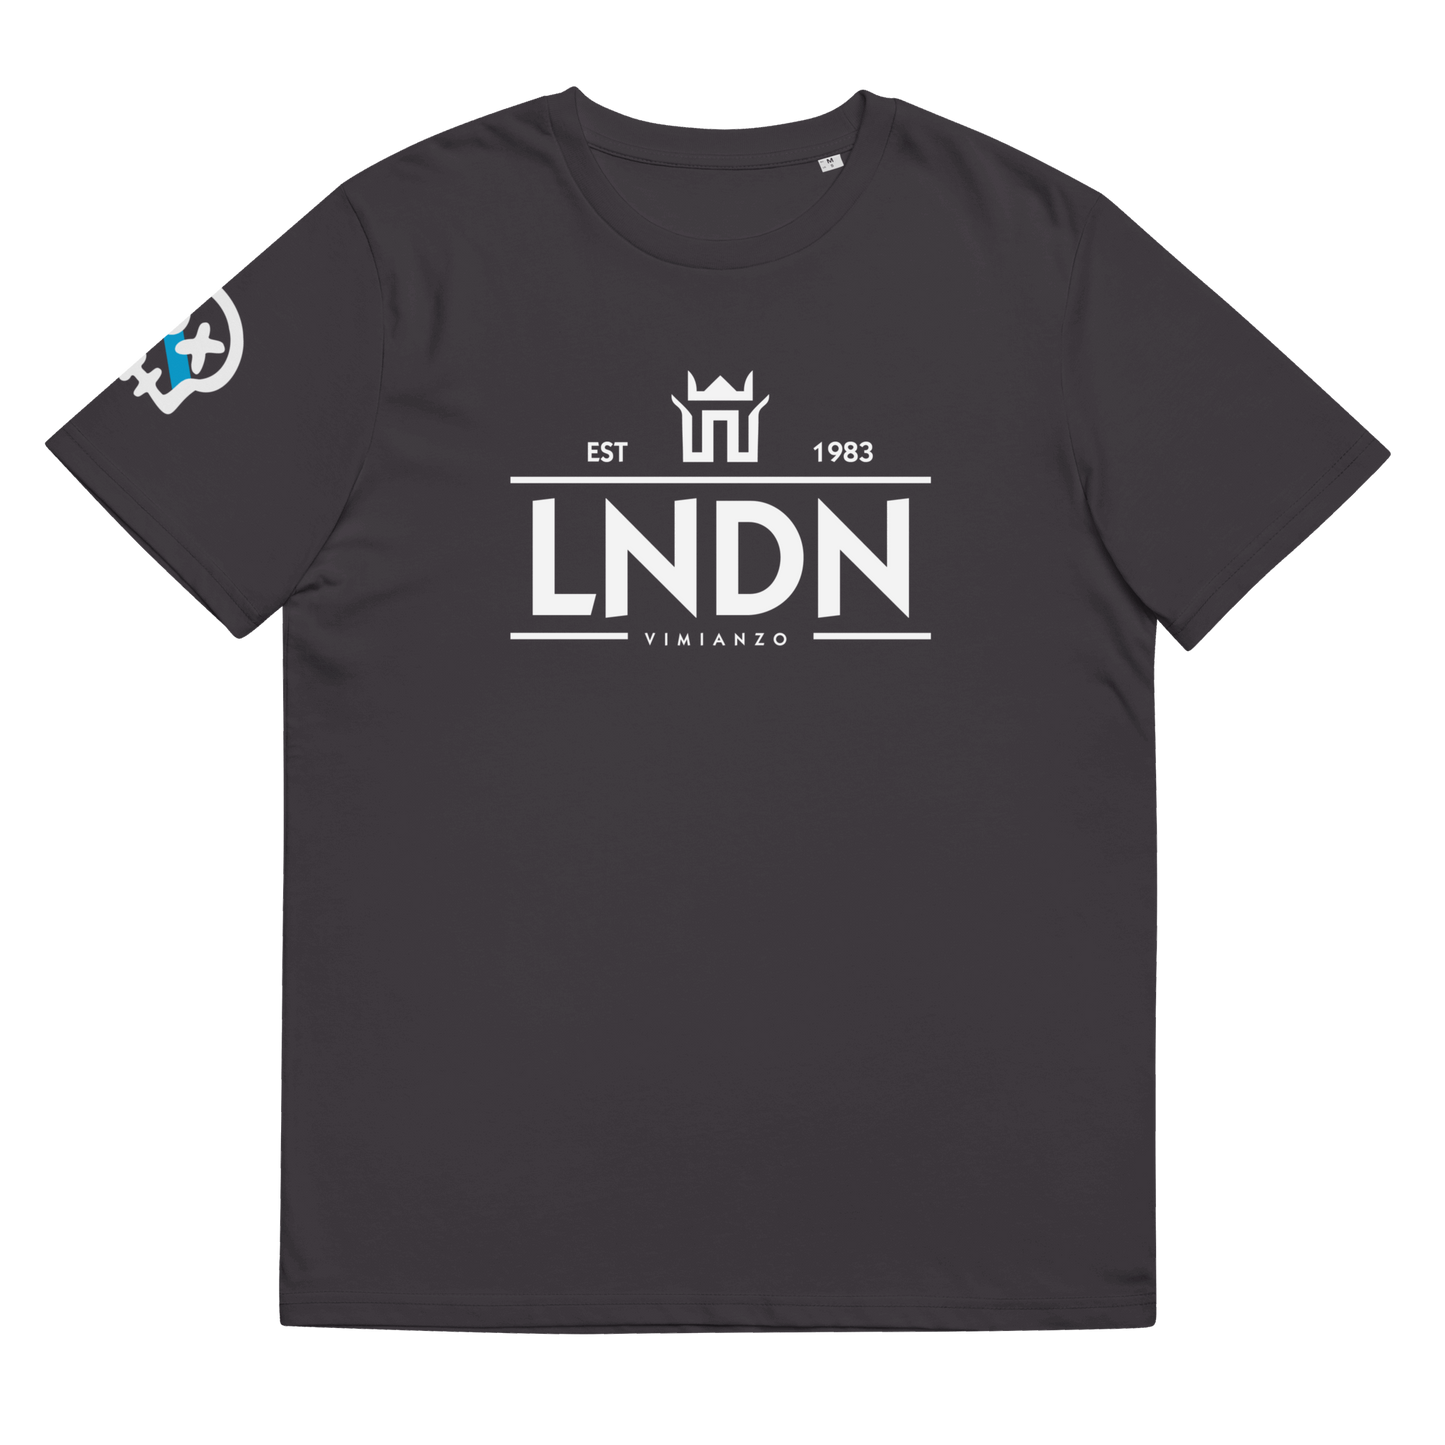 Camiseta # LONDON x COSTA DA MORTE // BOUZA // ECO Algodón Orgánico // Unisex